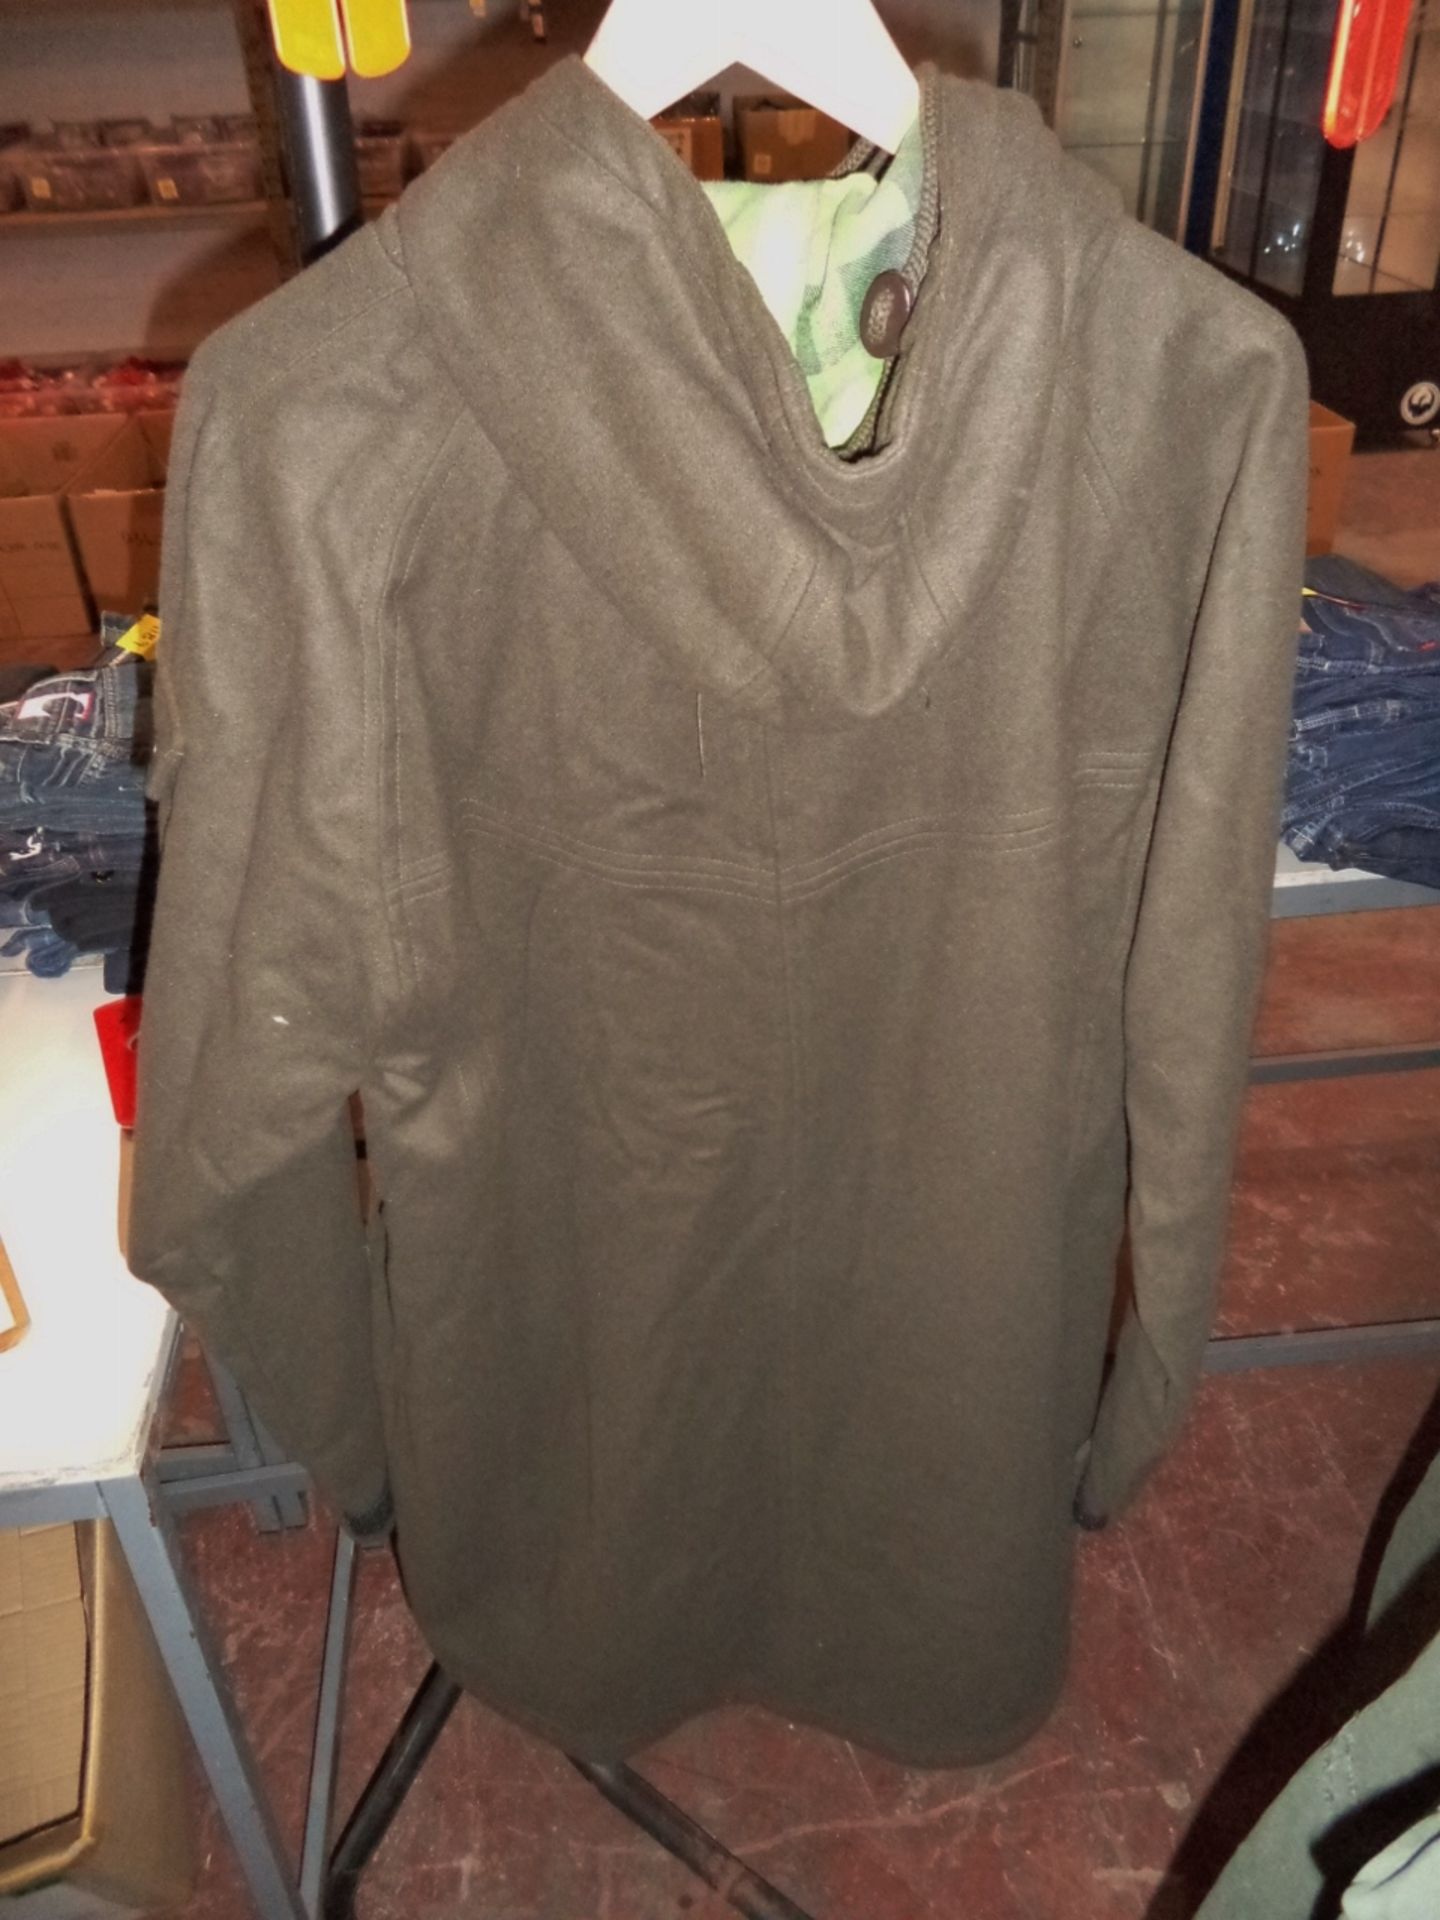 Ontisuka Tiger size XL green utility jacket - Image 2 of 2